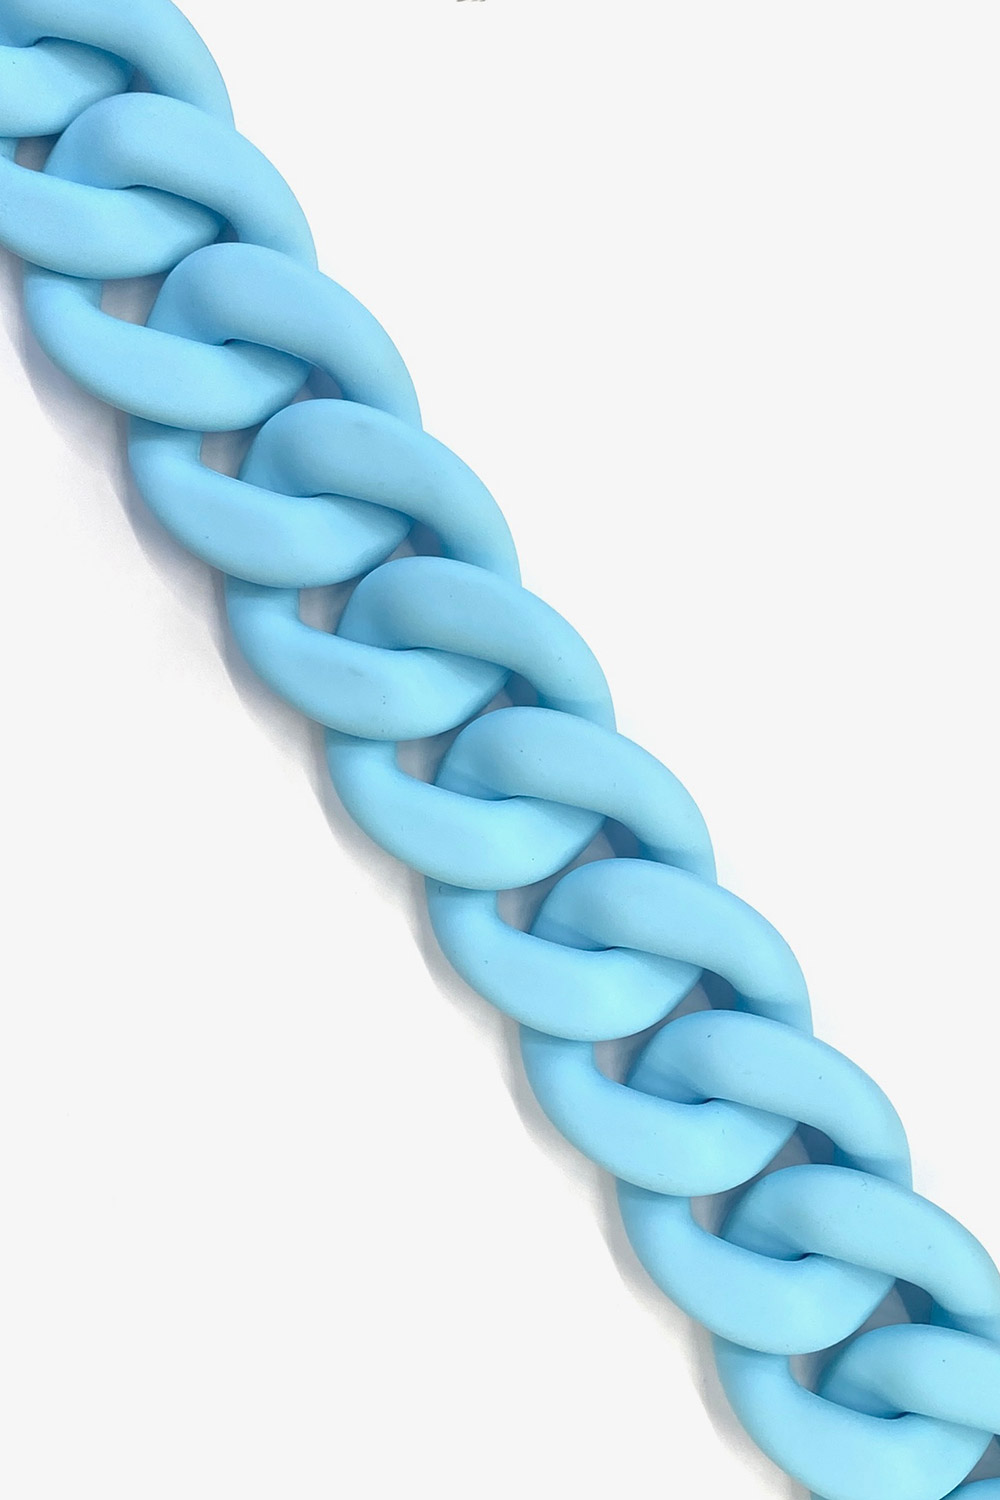 Silicon Chain - thick 60cm - Light Blue